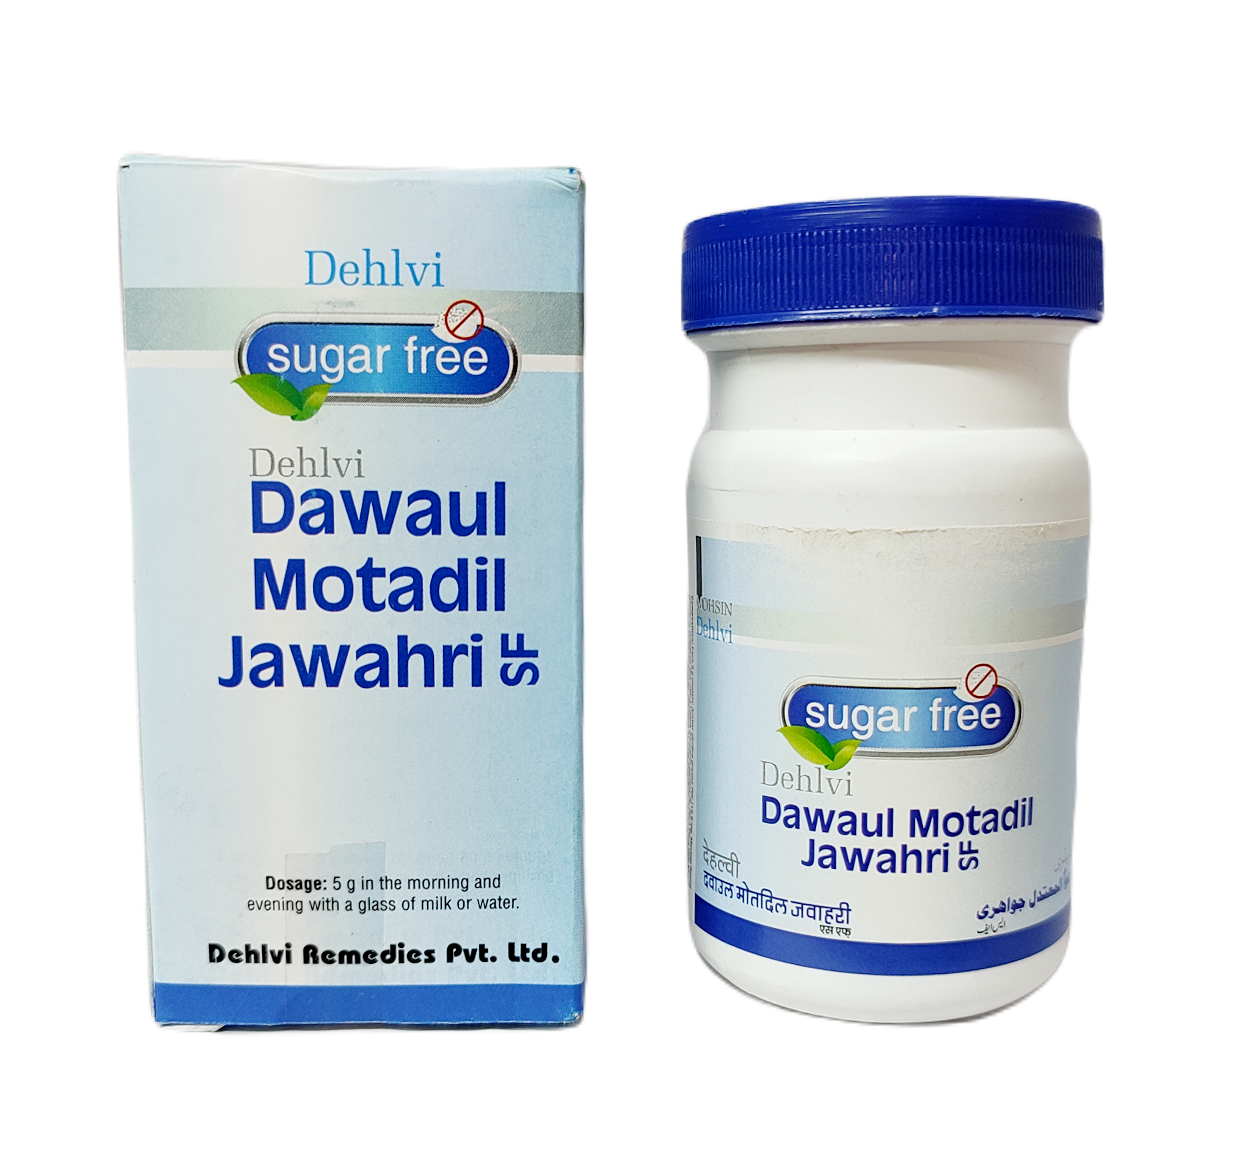 Dawaul Motadil Jawahri SF Dehlvi (125g)